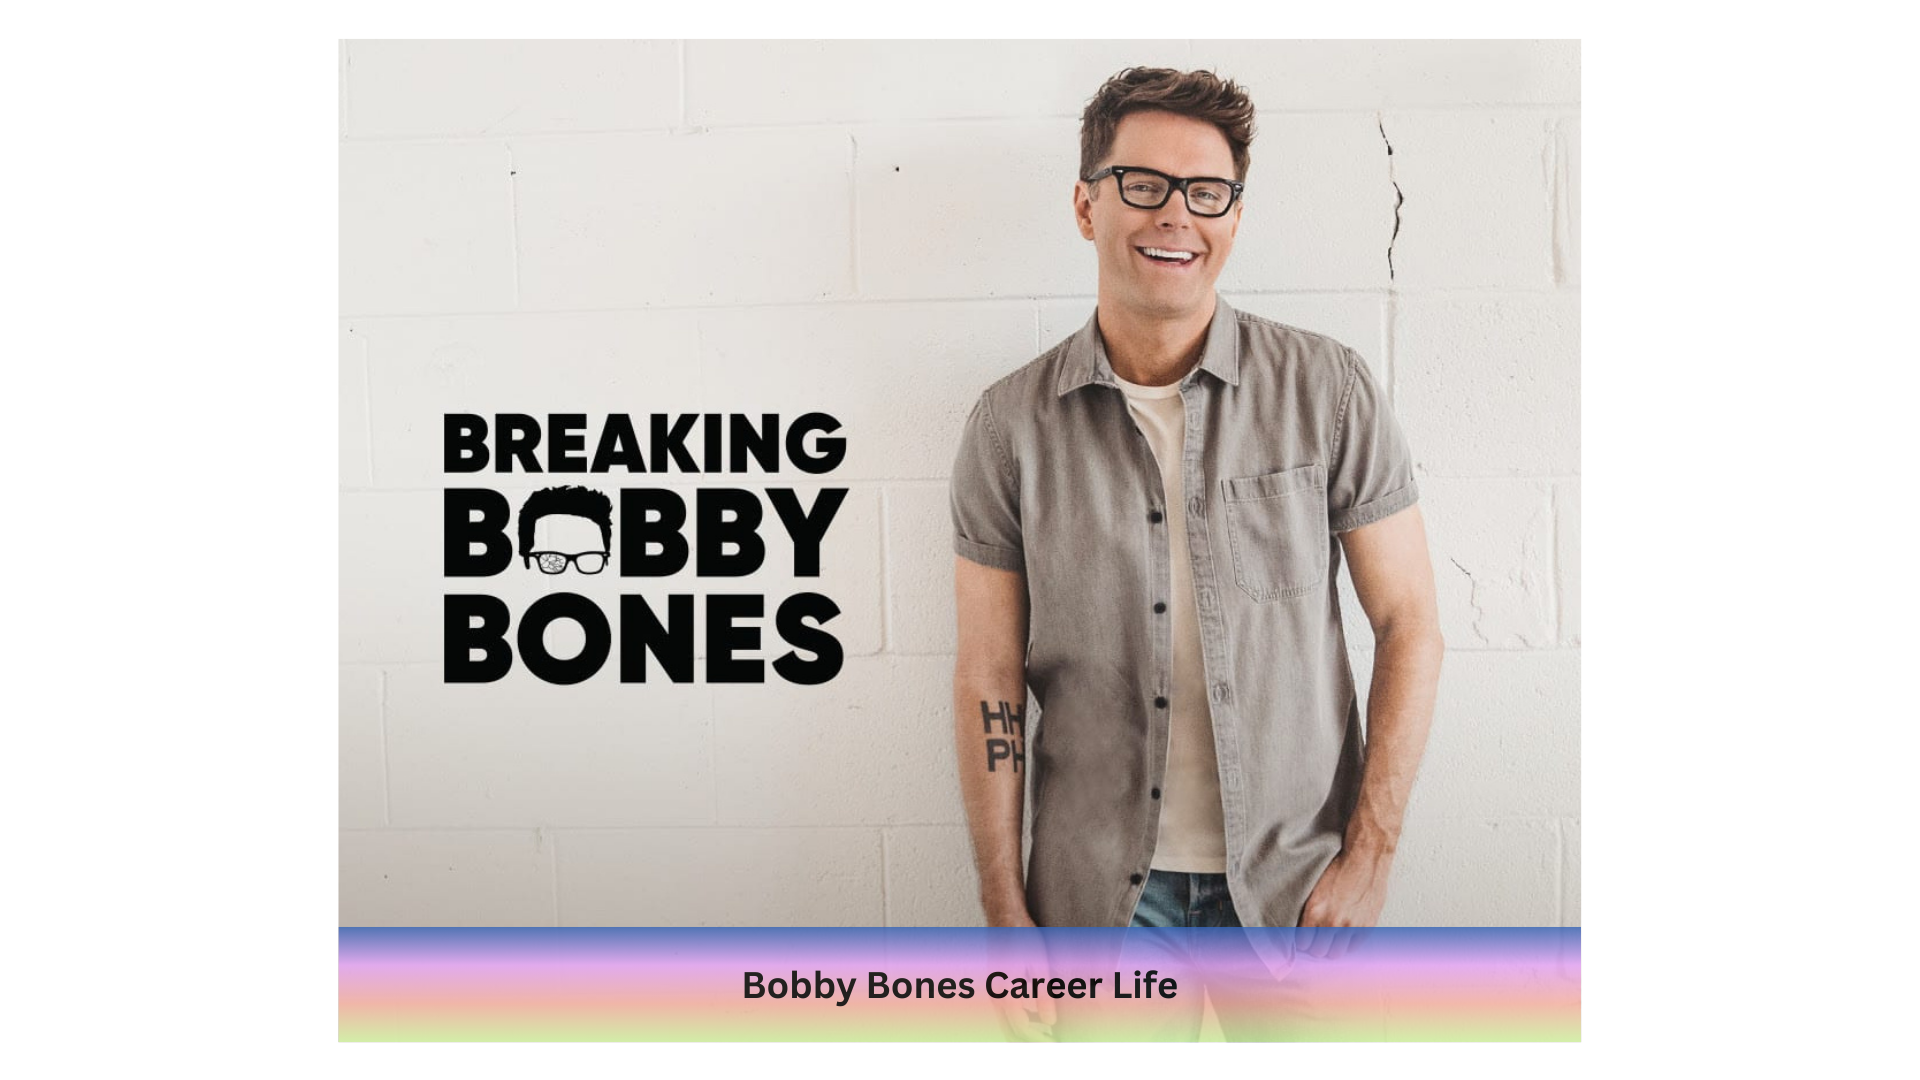 Bobby Bones Career Life